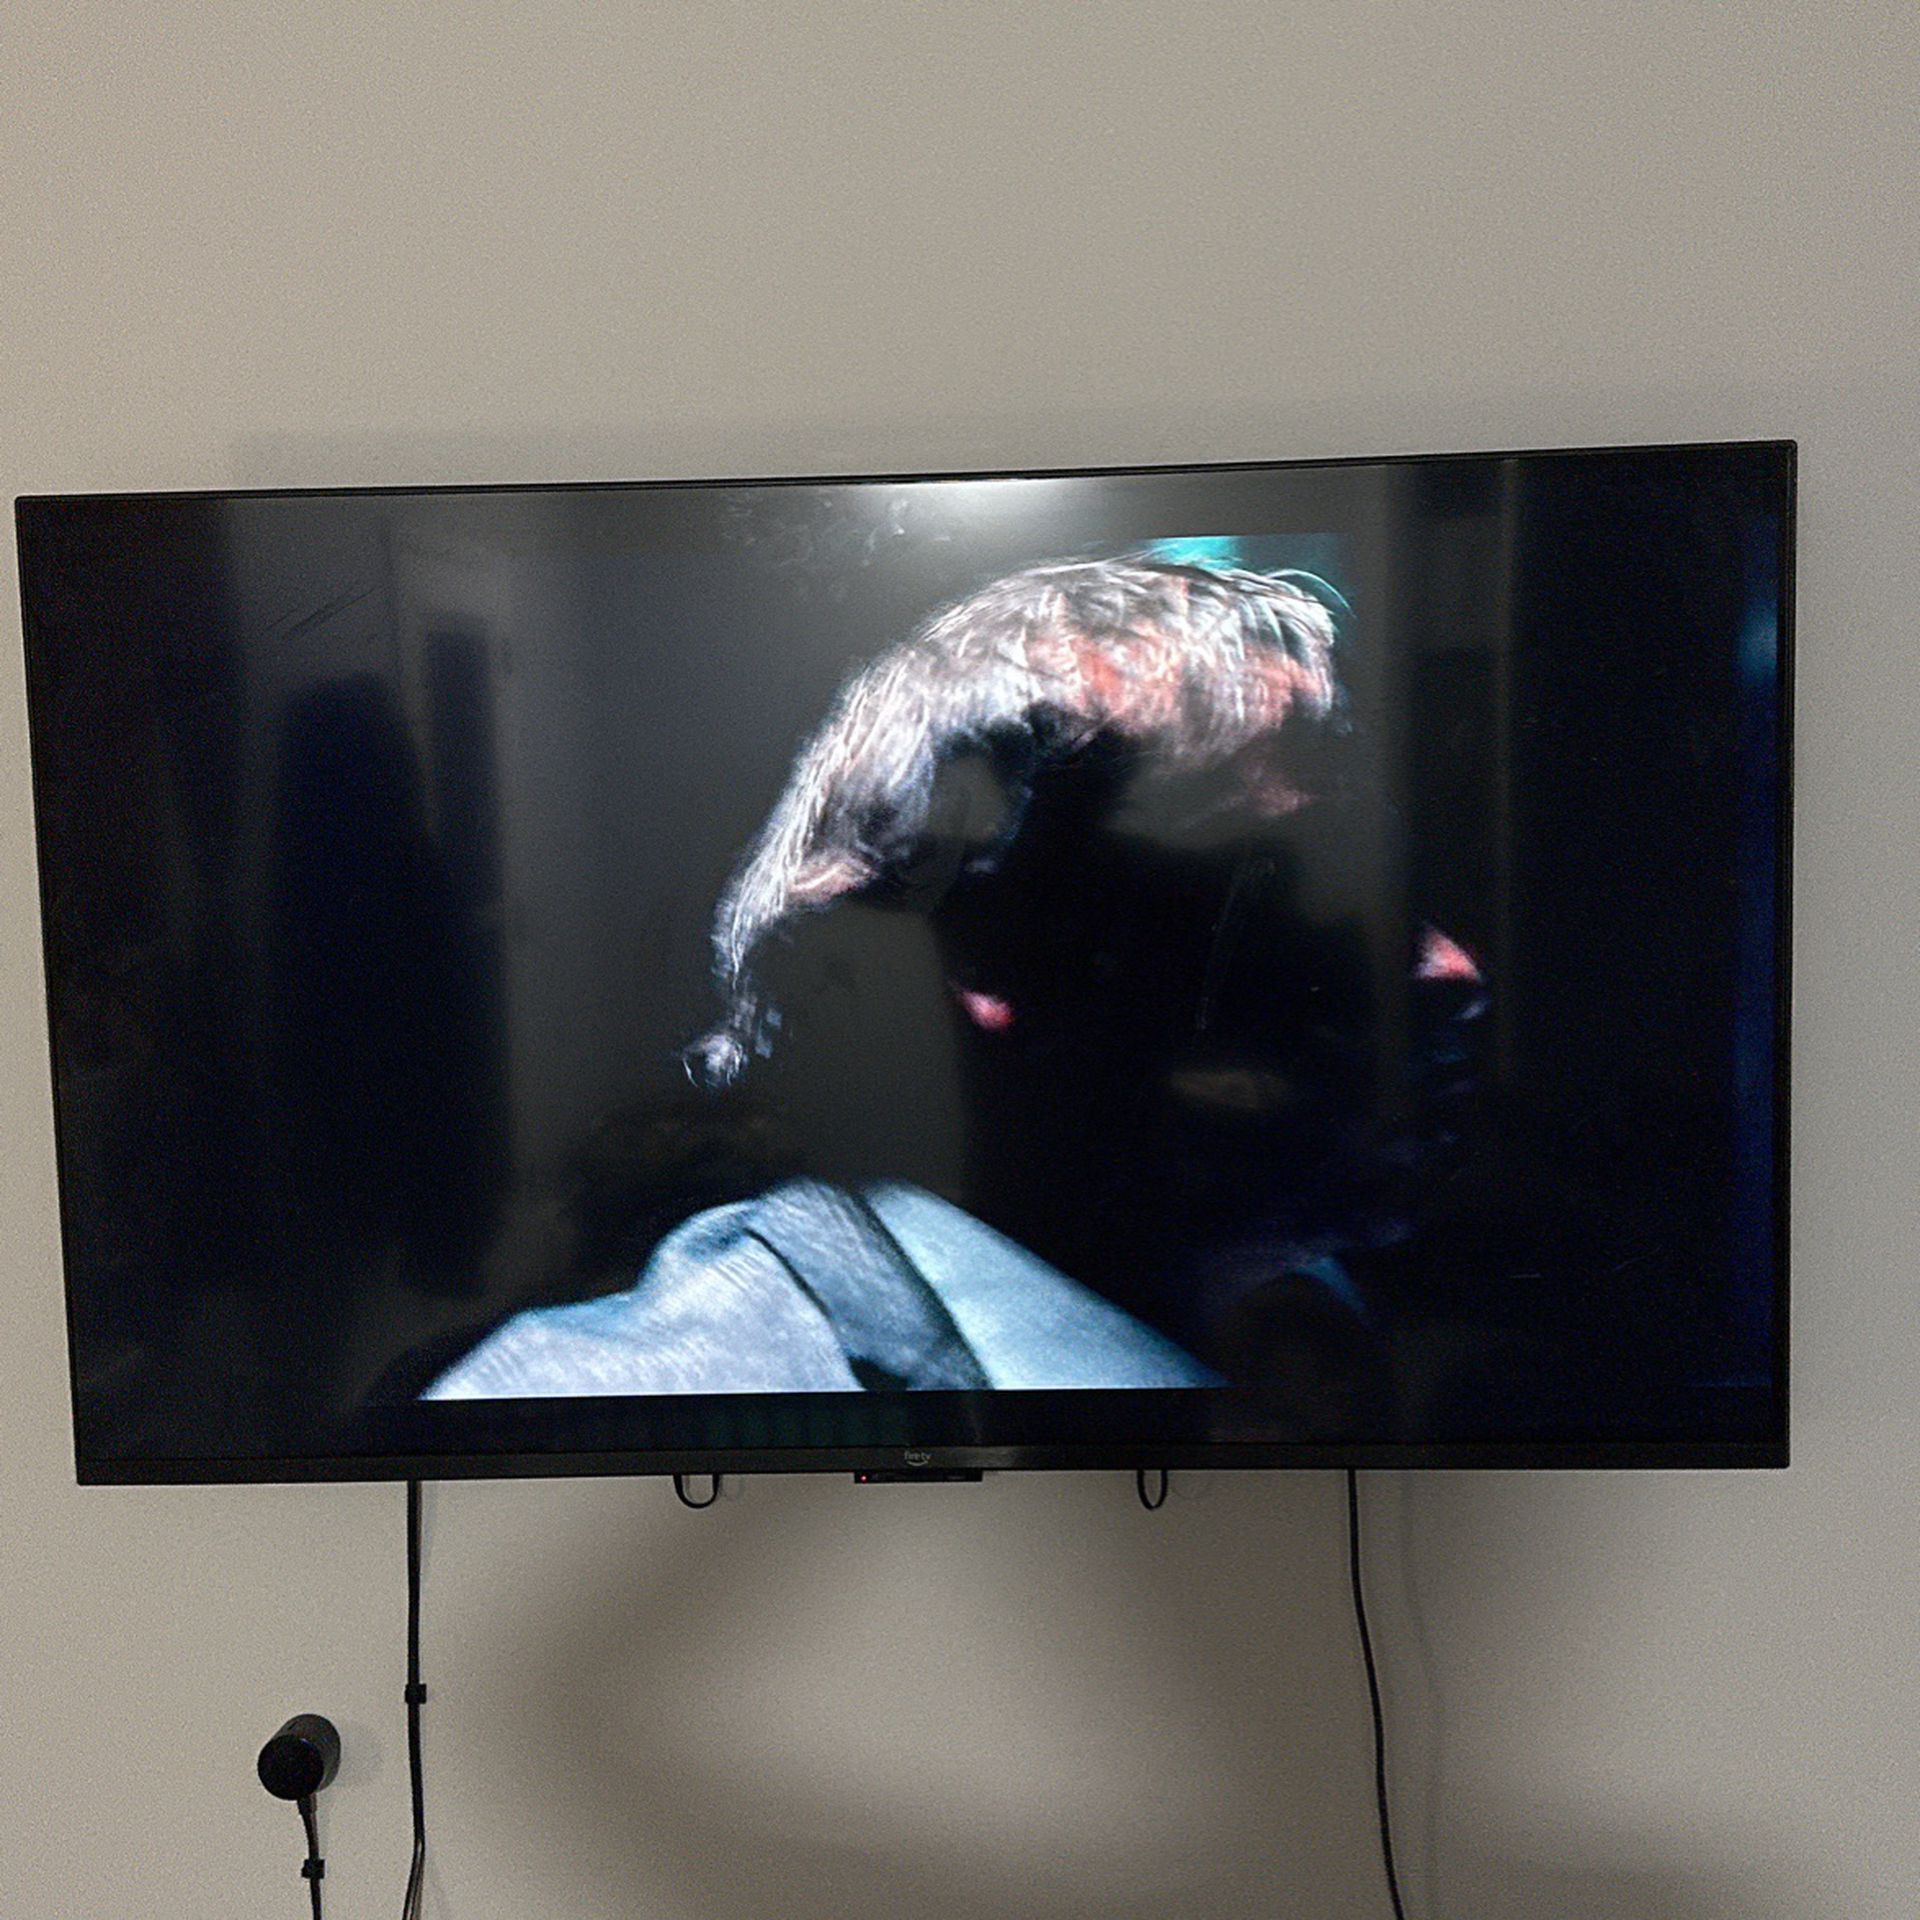 Amazon Fire TV 50” Omni Series 4K UHD smart TV, hands-free with Alexa